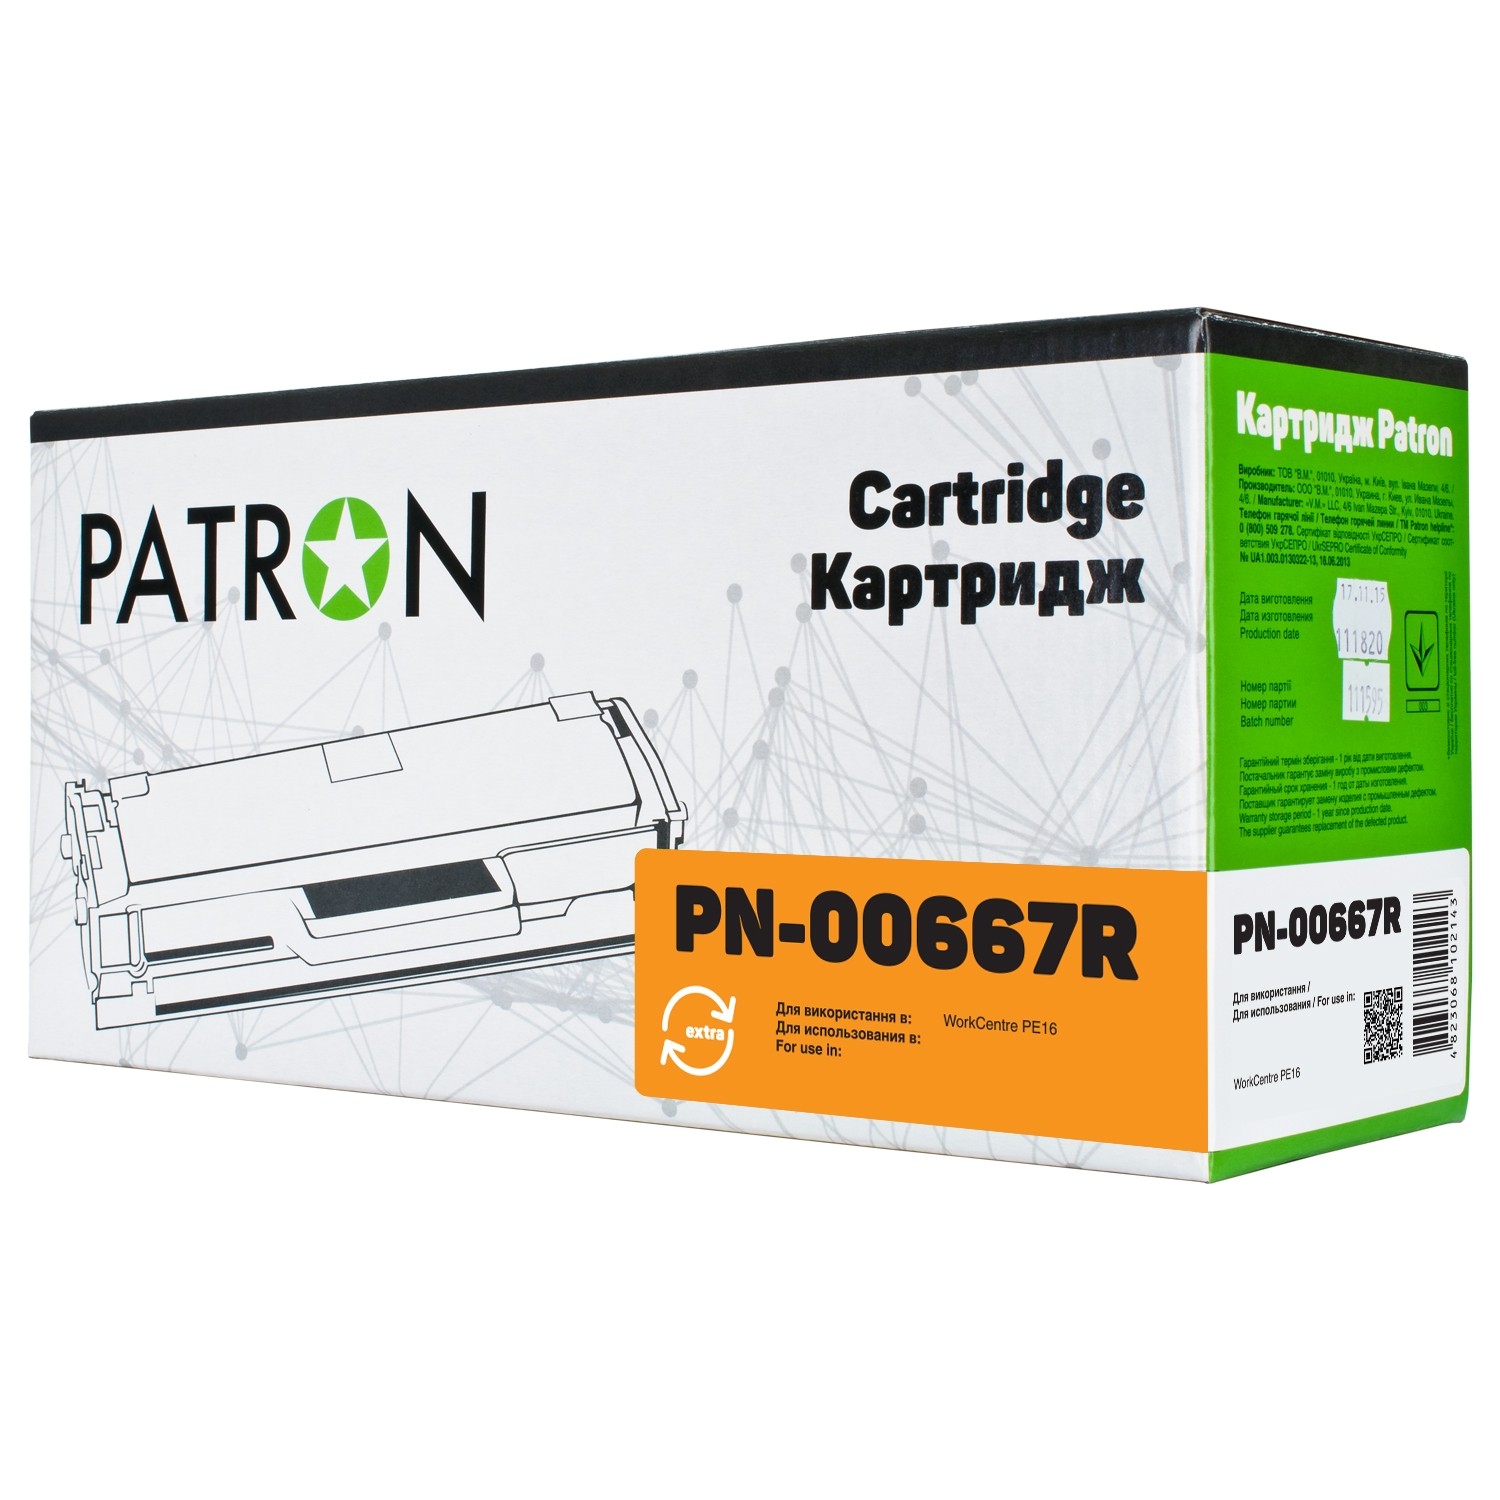 КАРТРИДЖ XEROX 113R00667 (PN-00667R) (WC PE16) PATRON Extra 